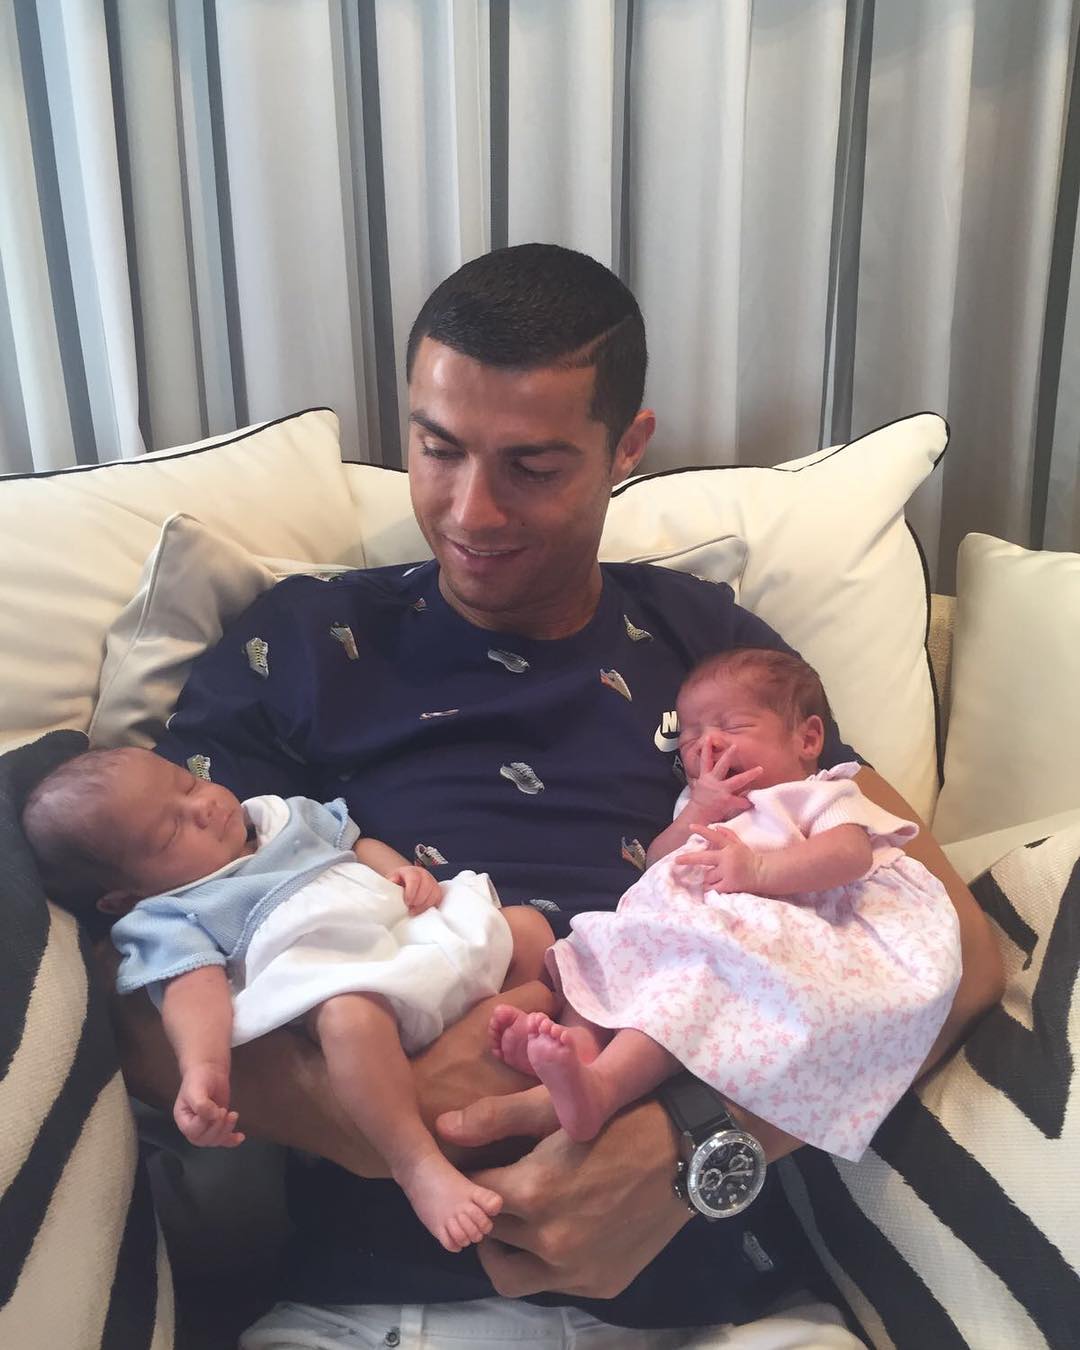 Cristiano Ronaldo Carrying Twins Via Surrogate 